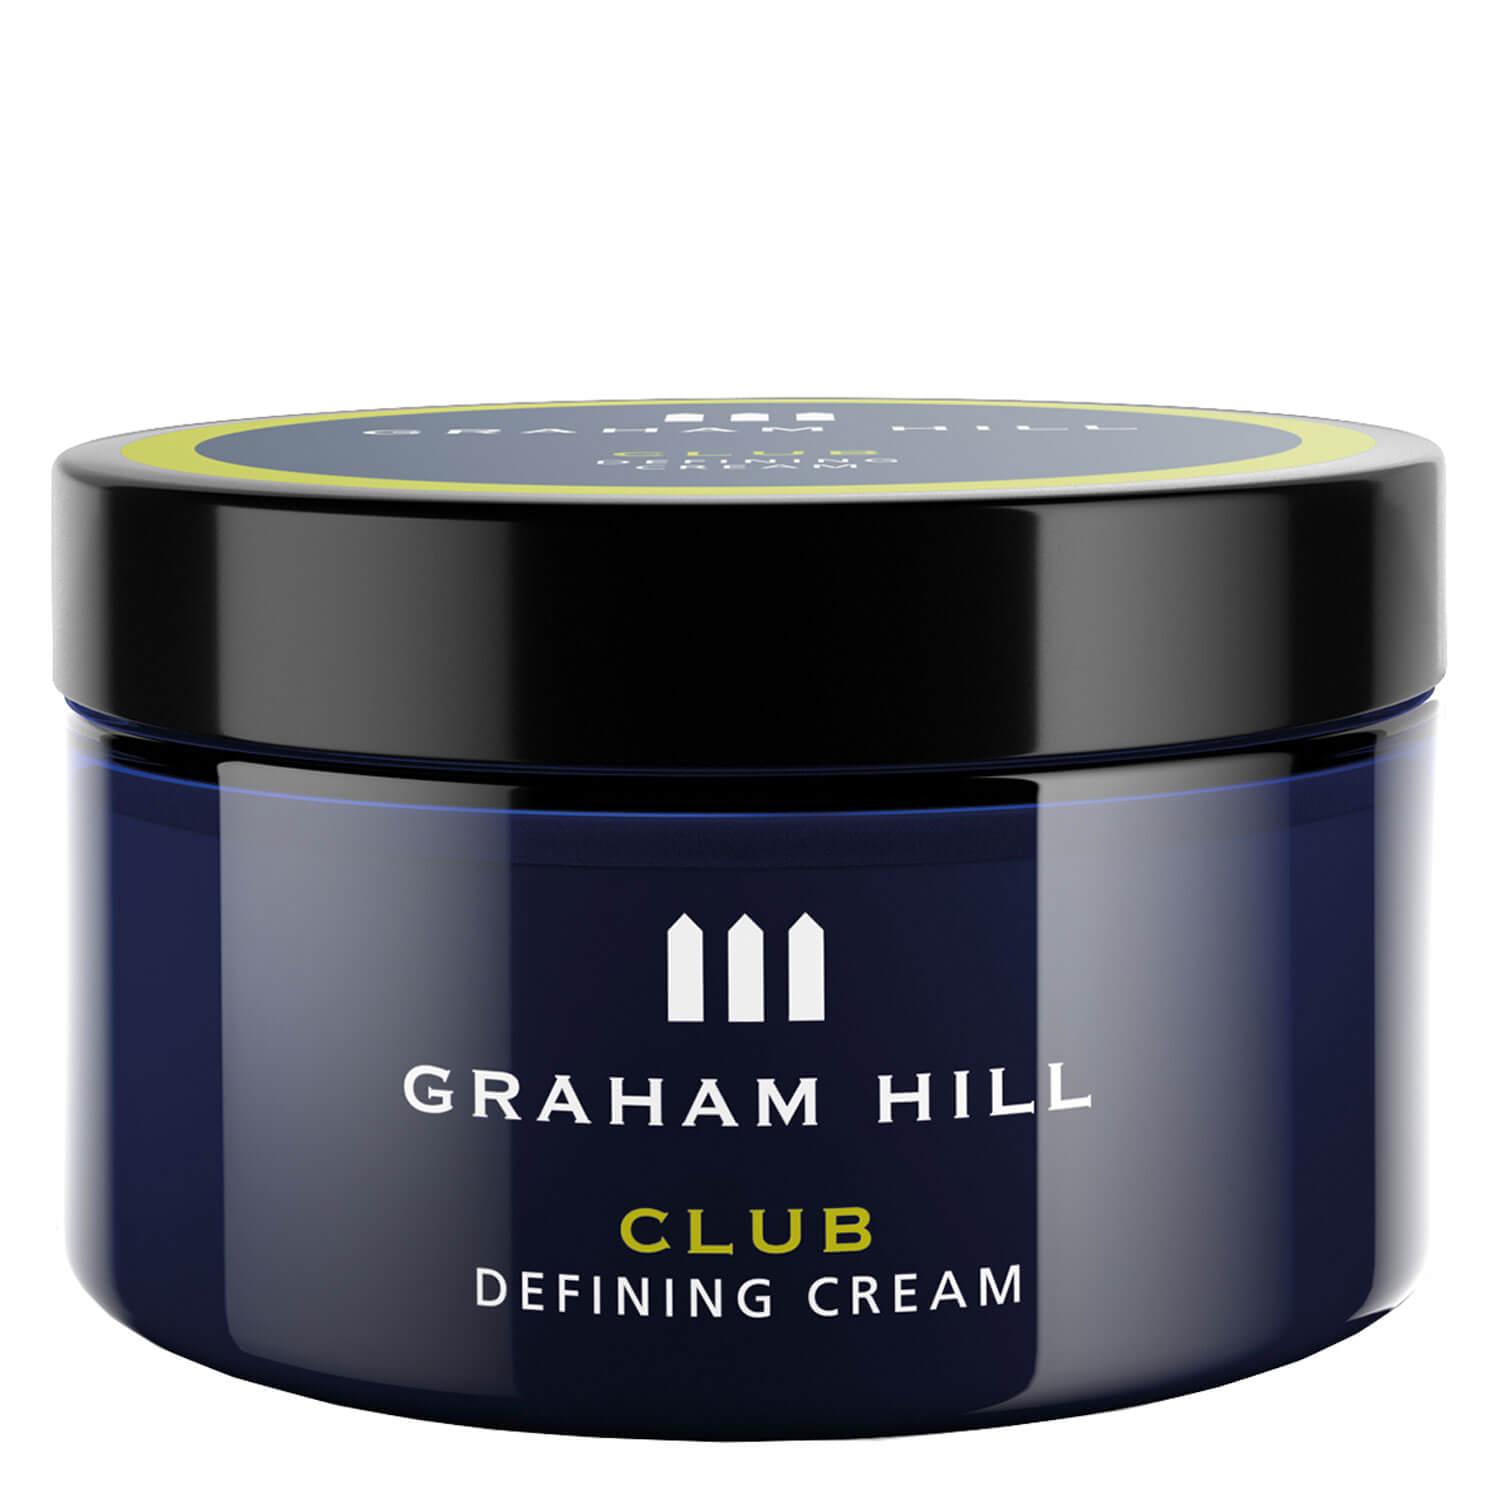 Styling & Grooming - Club Defining Cream